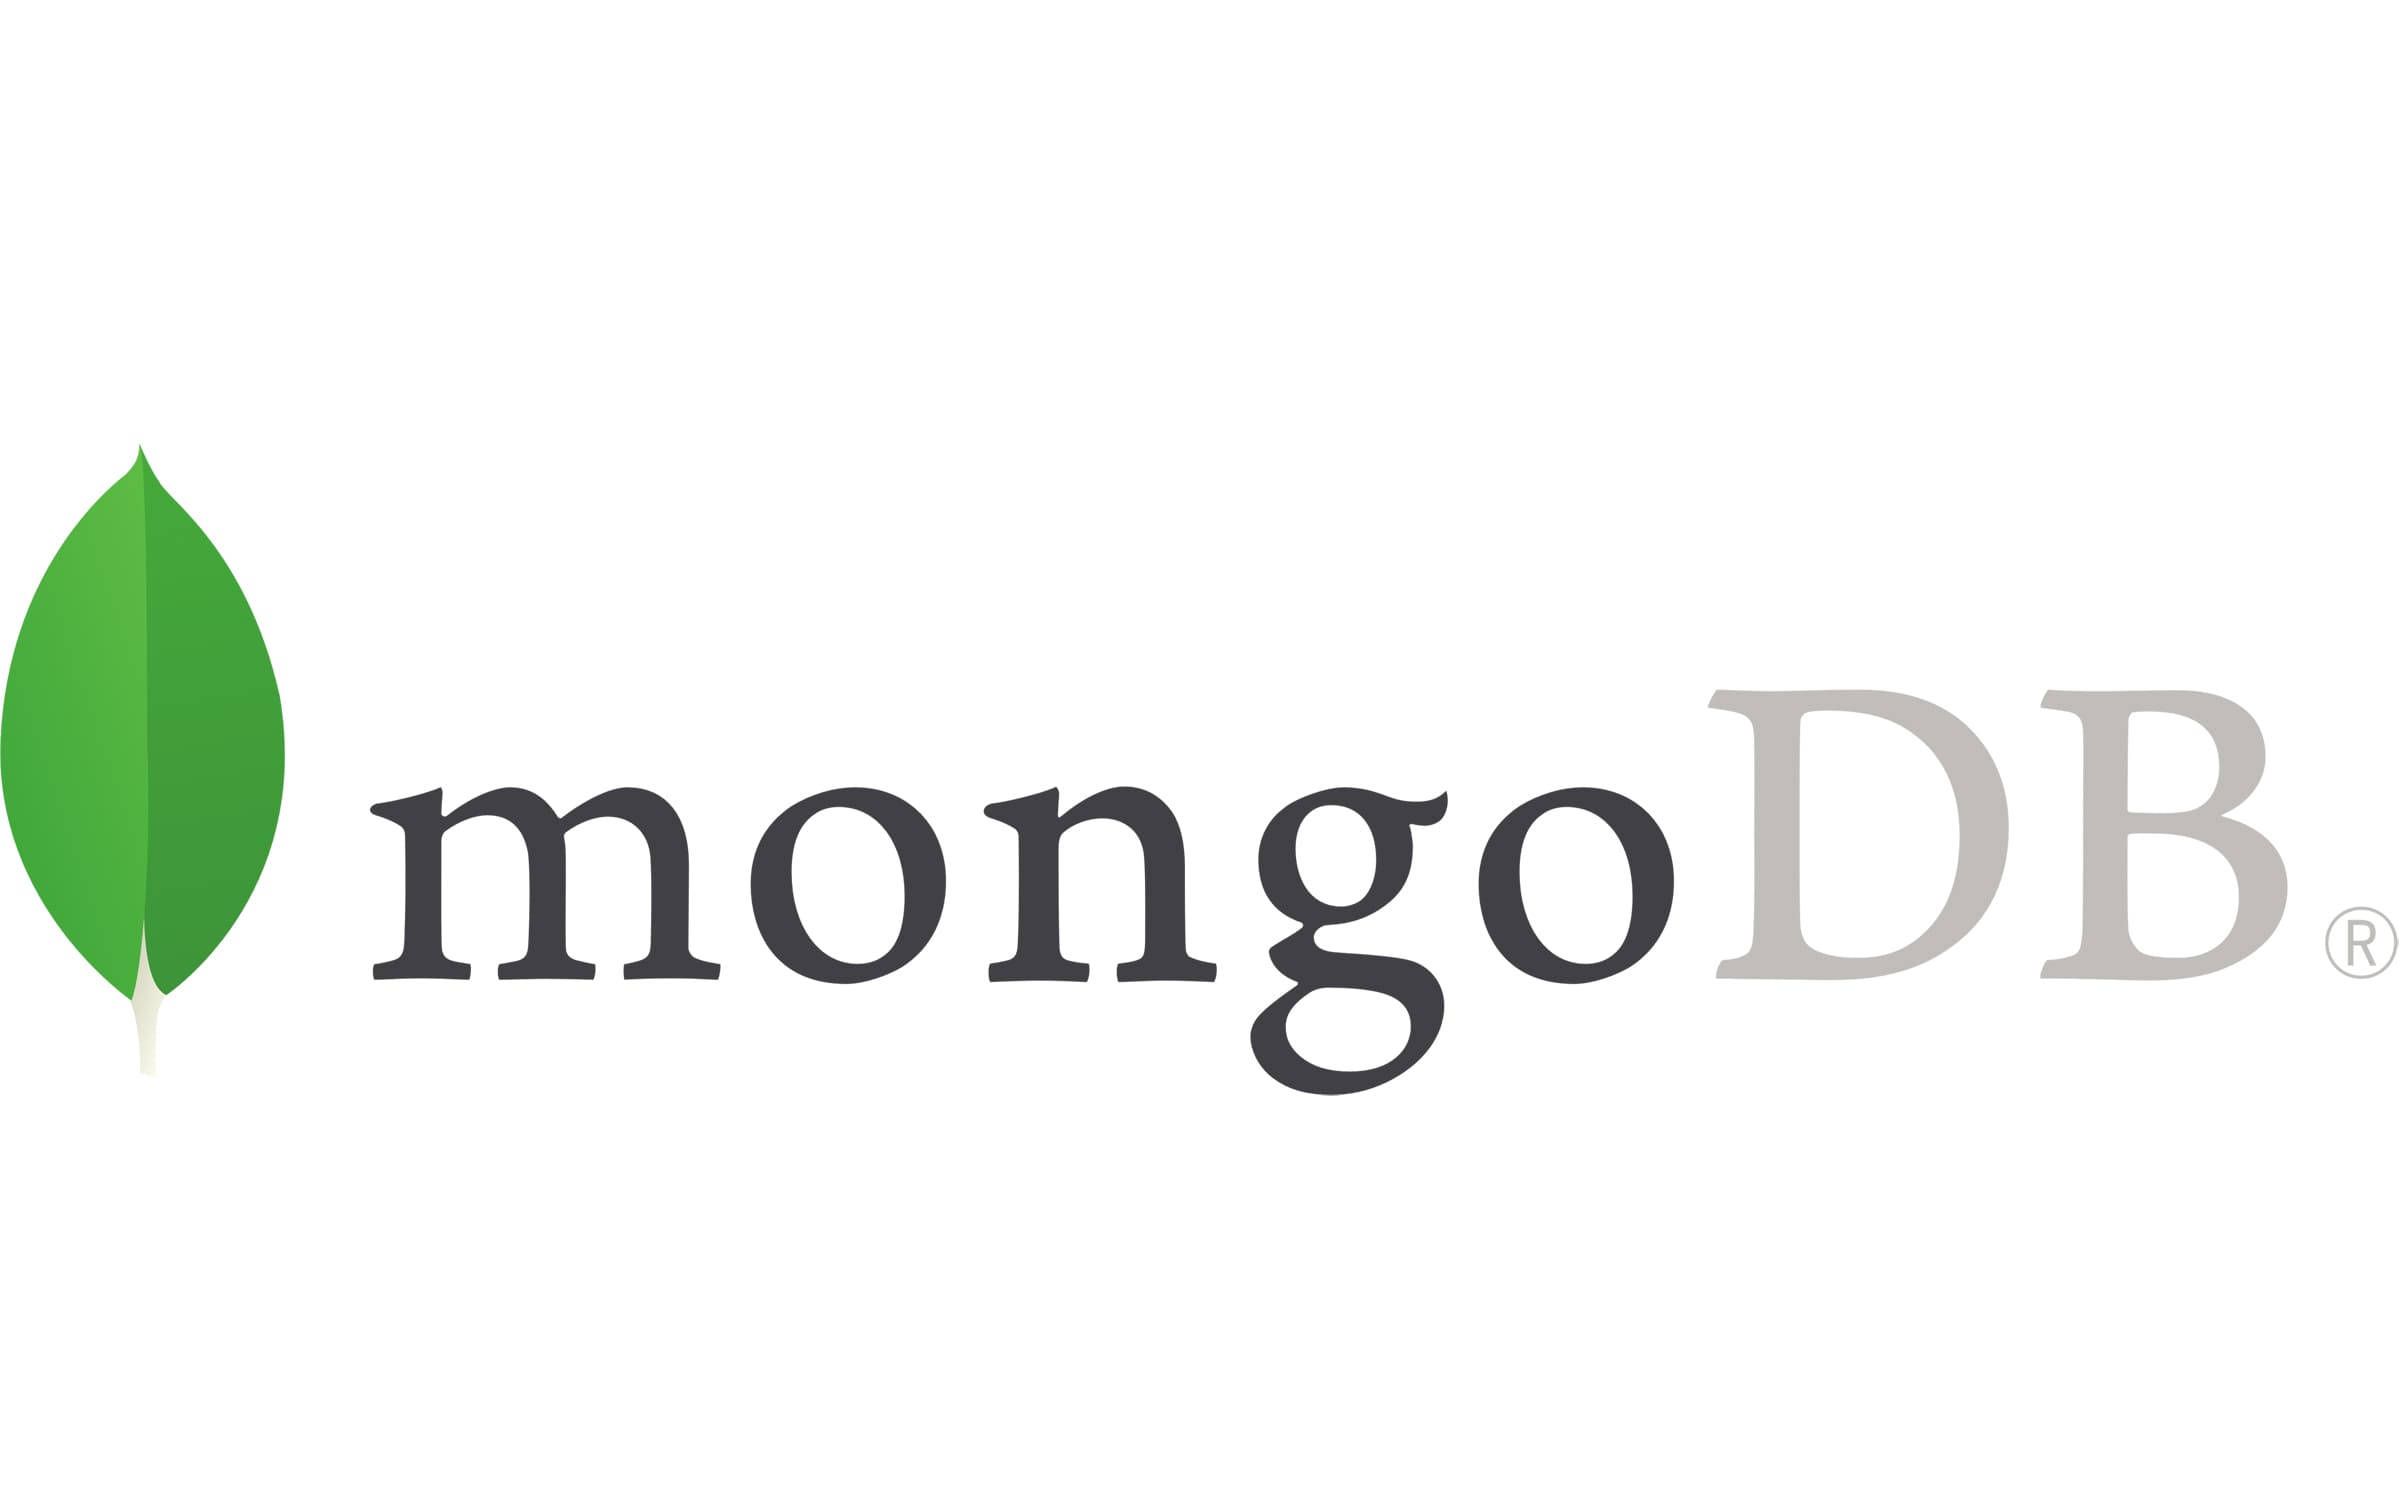 MongoDB (Document Database)